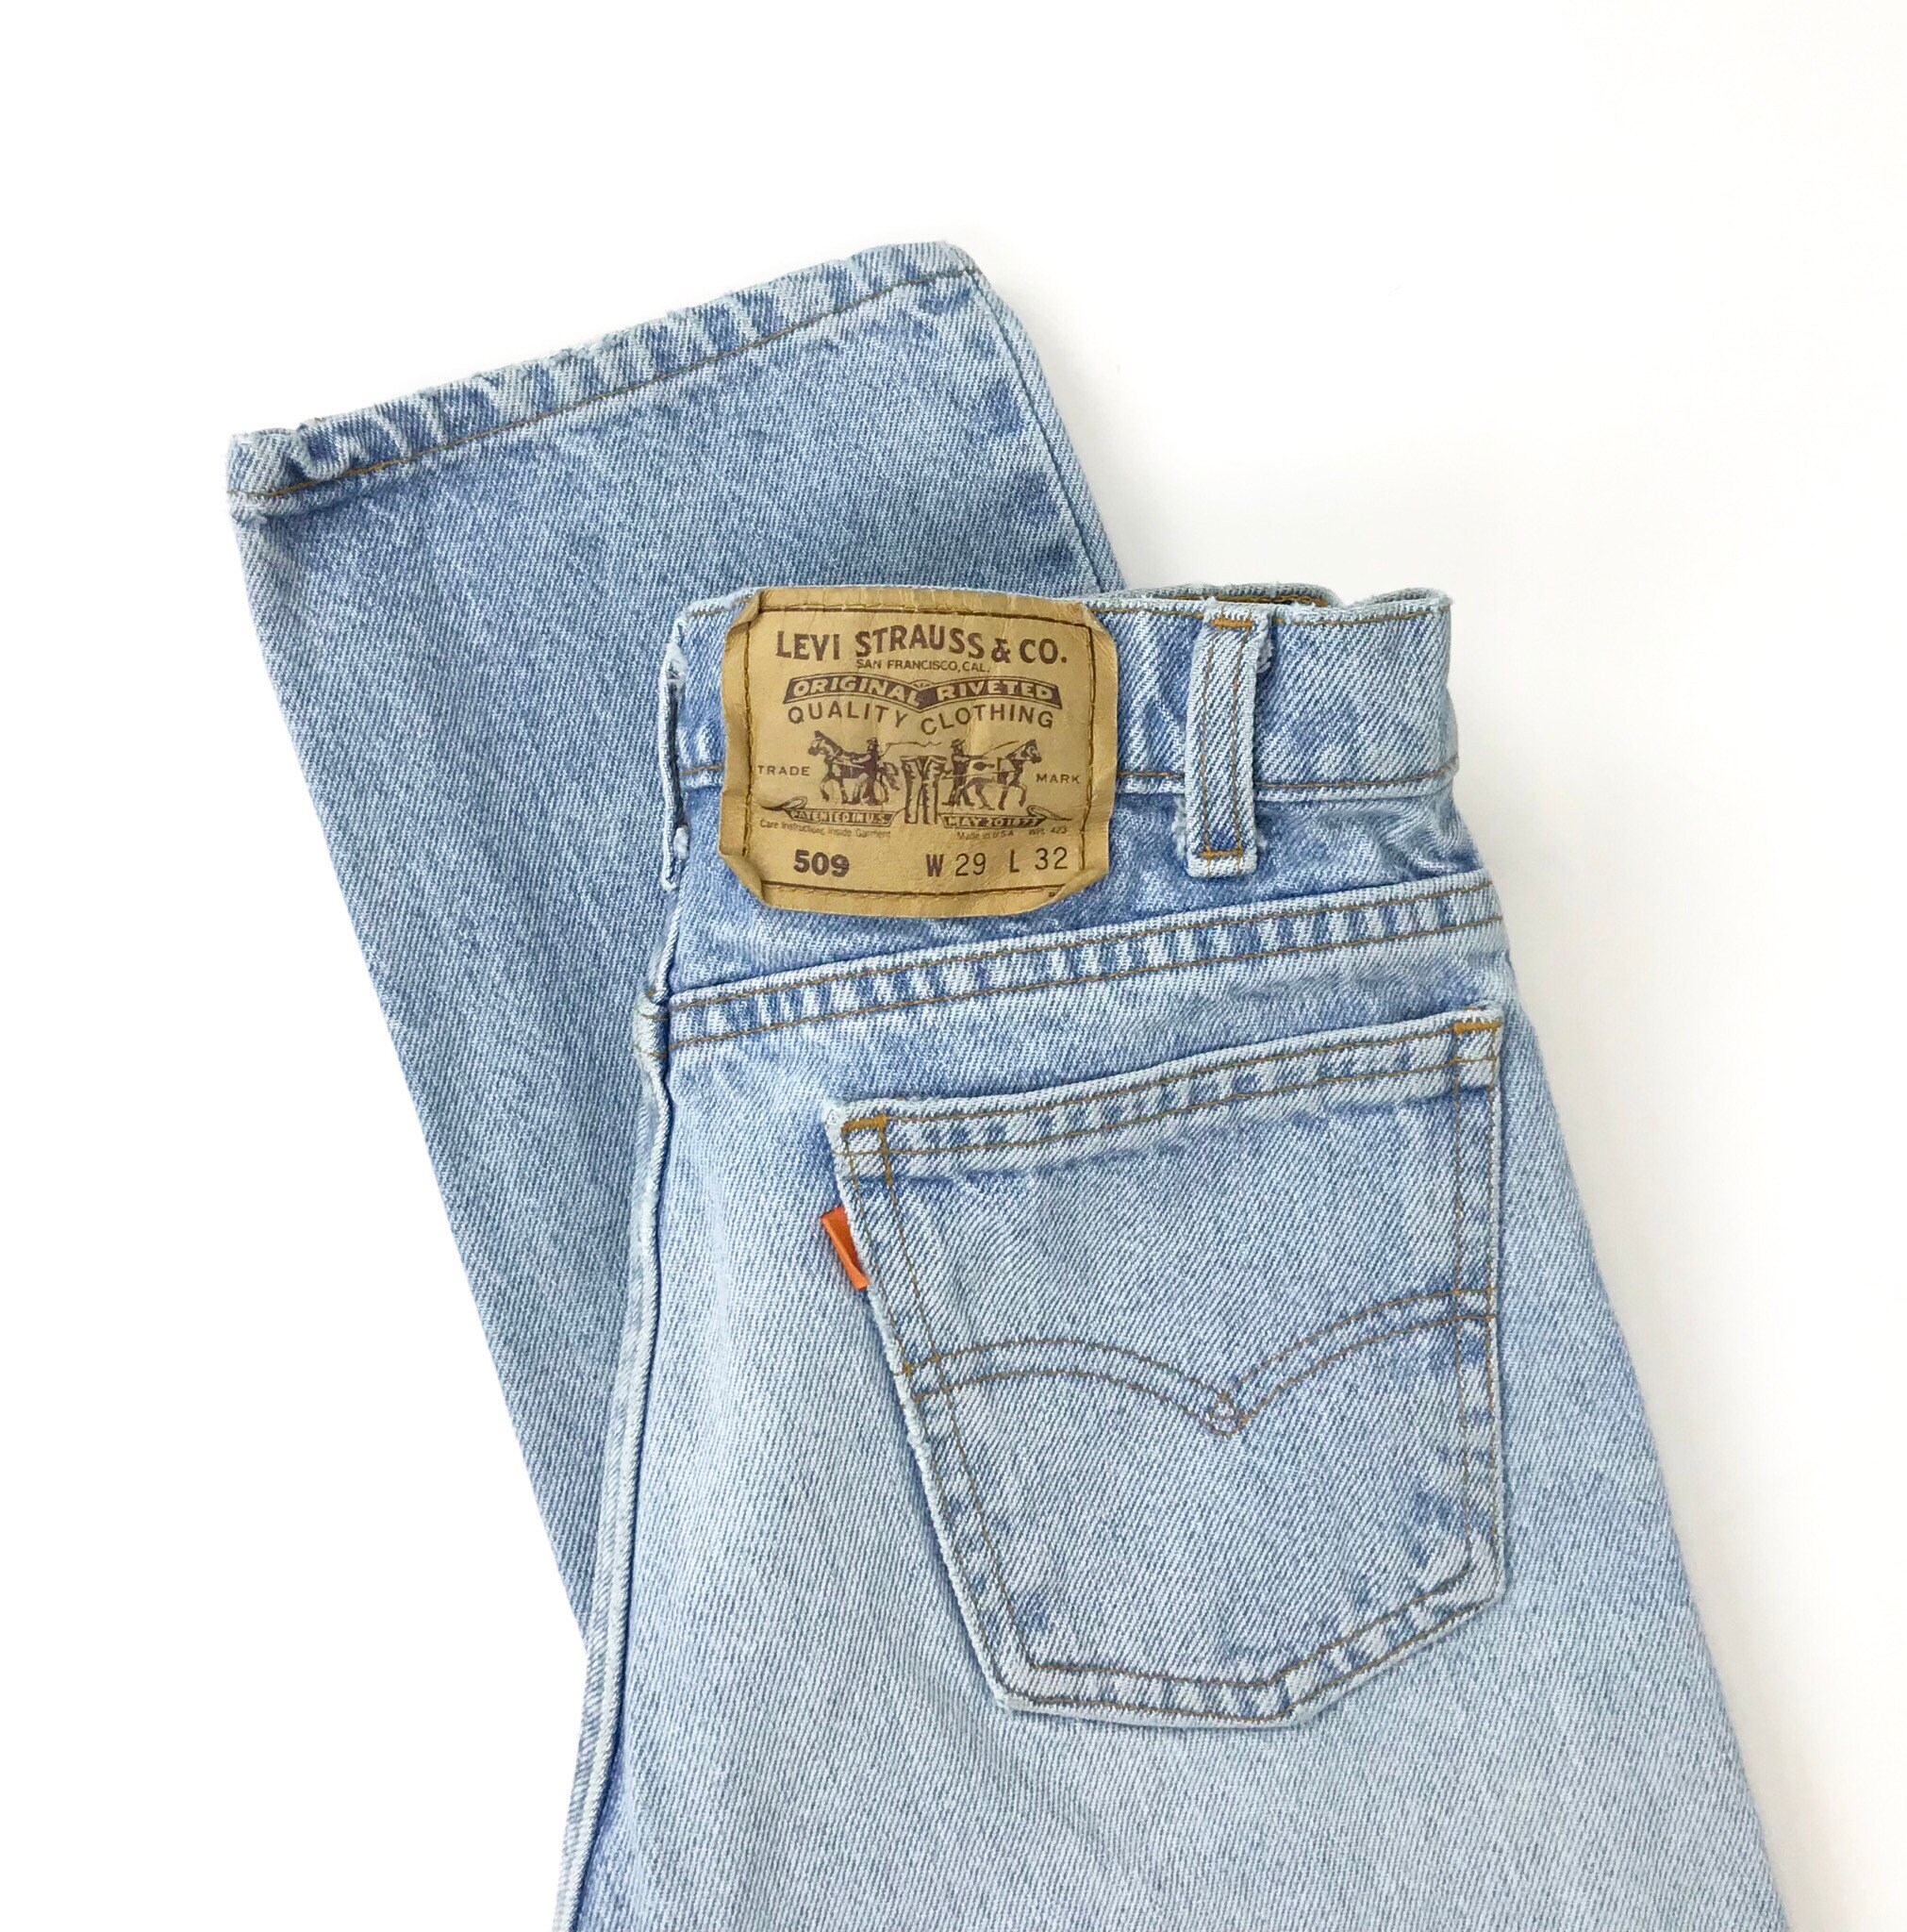 Levi's 509 Orange Tab Jeans / Size 26